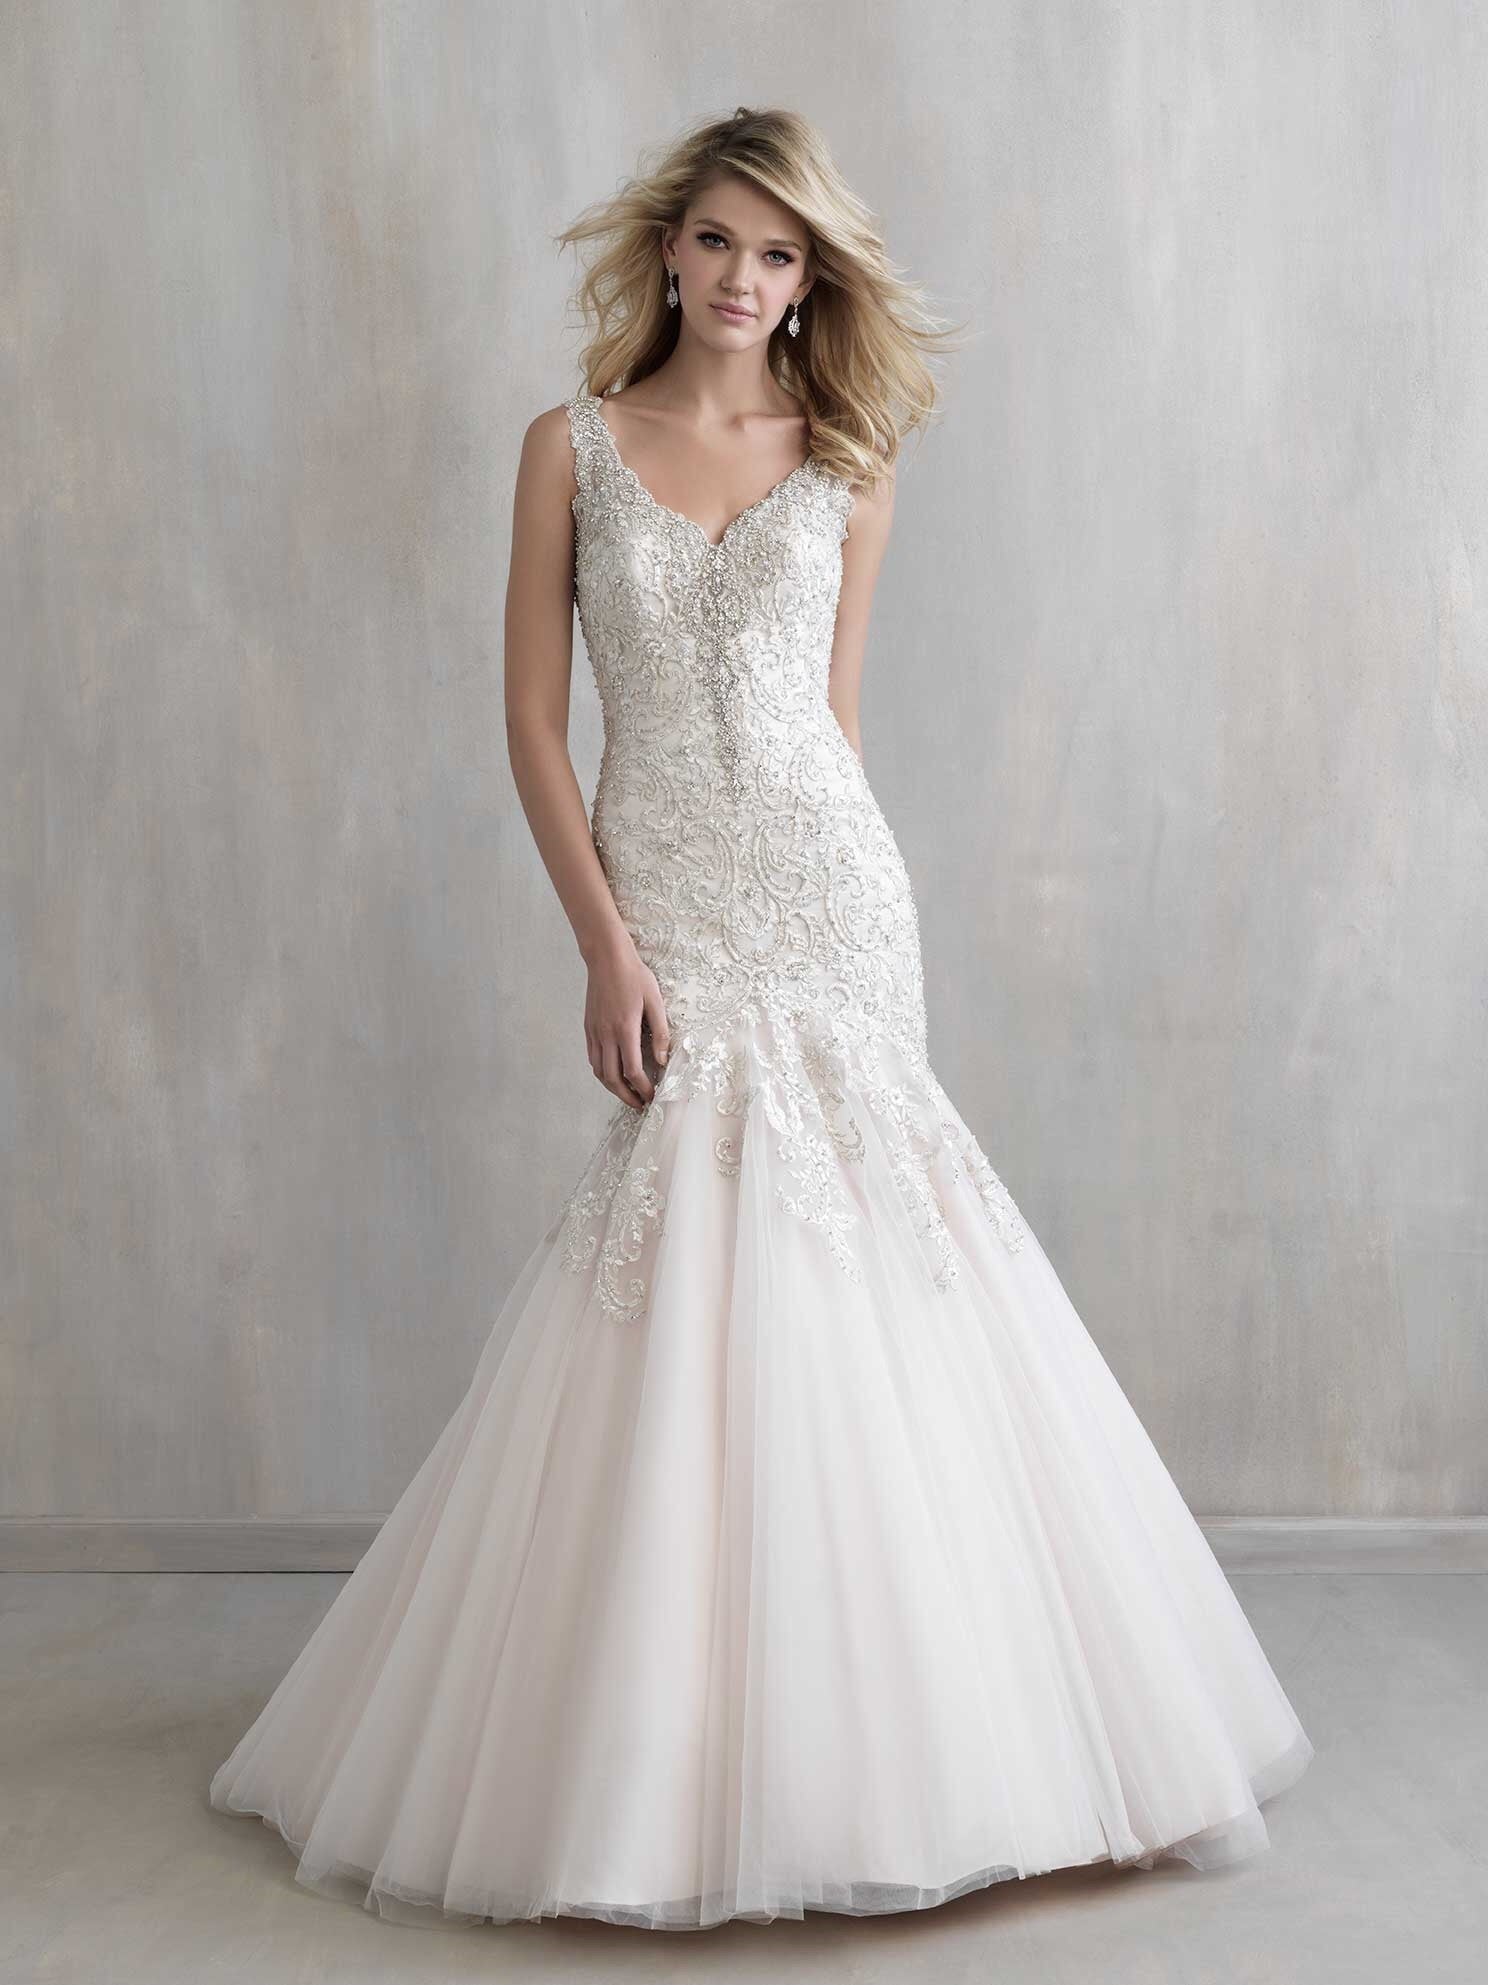 Nadine Merabi Evie Dress Size 8 – Loft Bridal